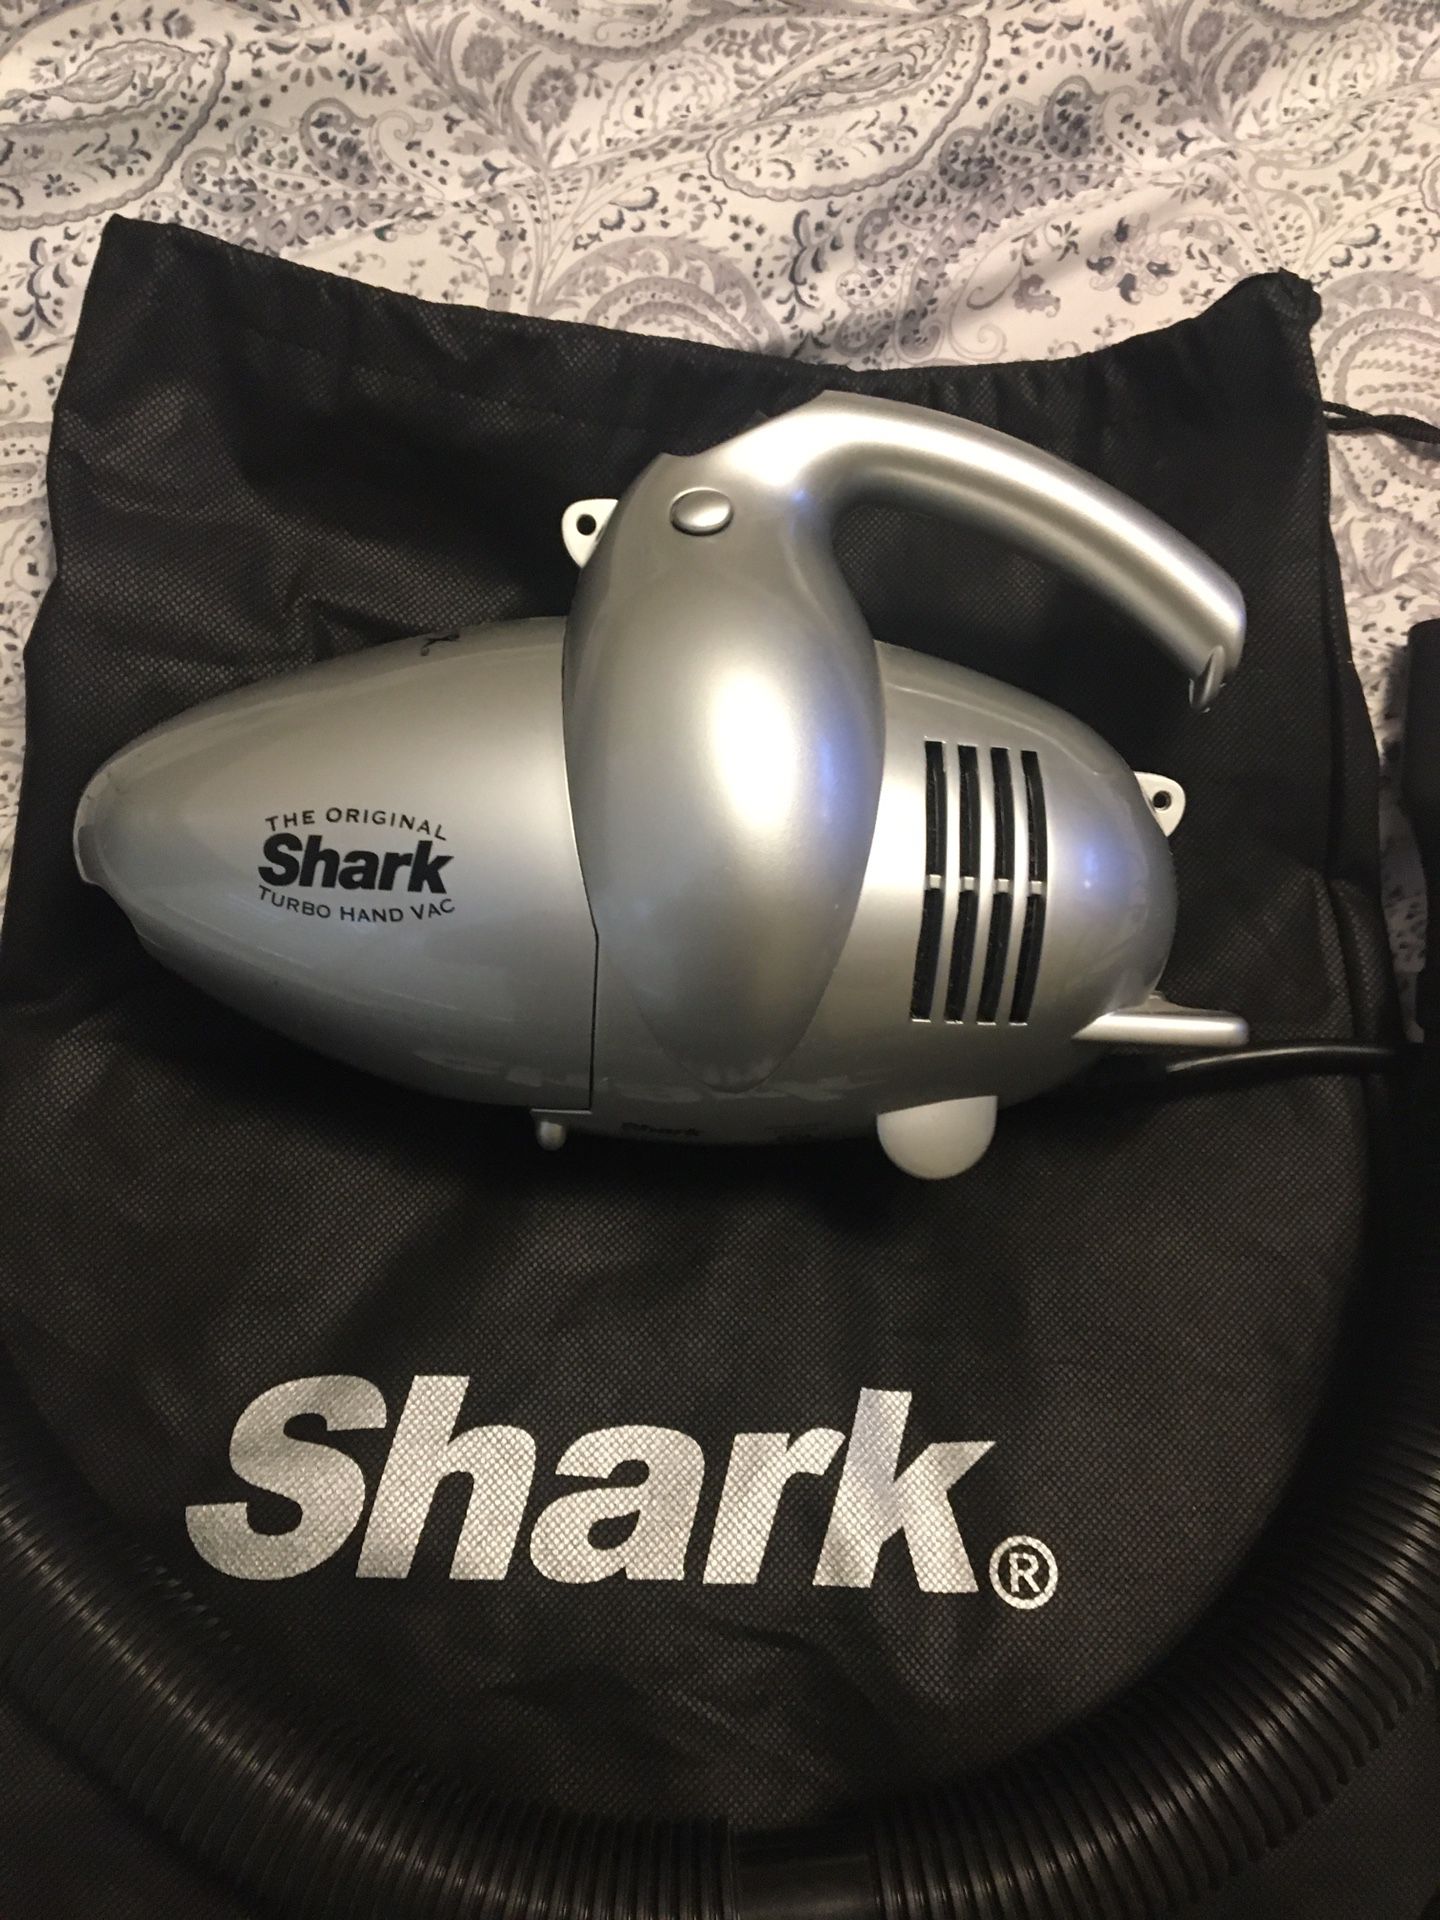 Shark 600 watts portable hand vacuum like new